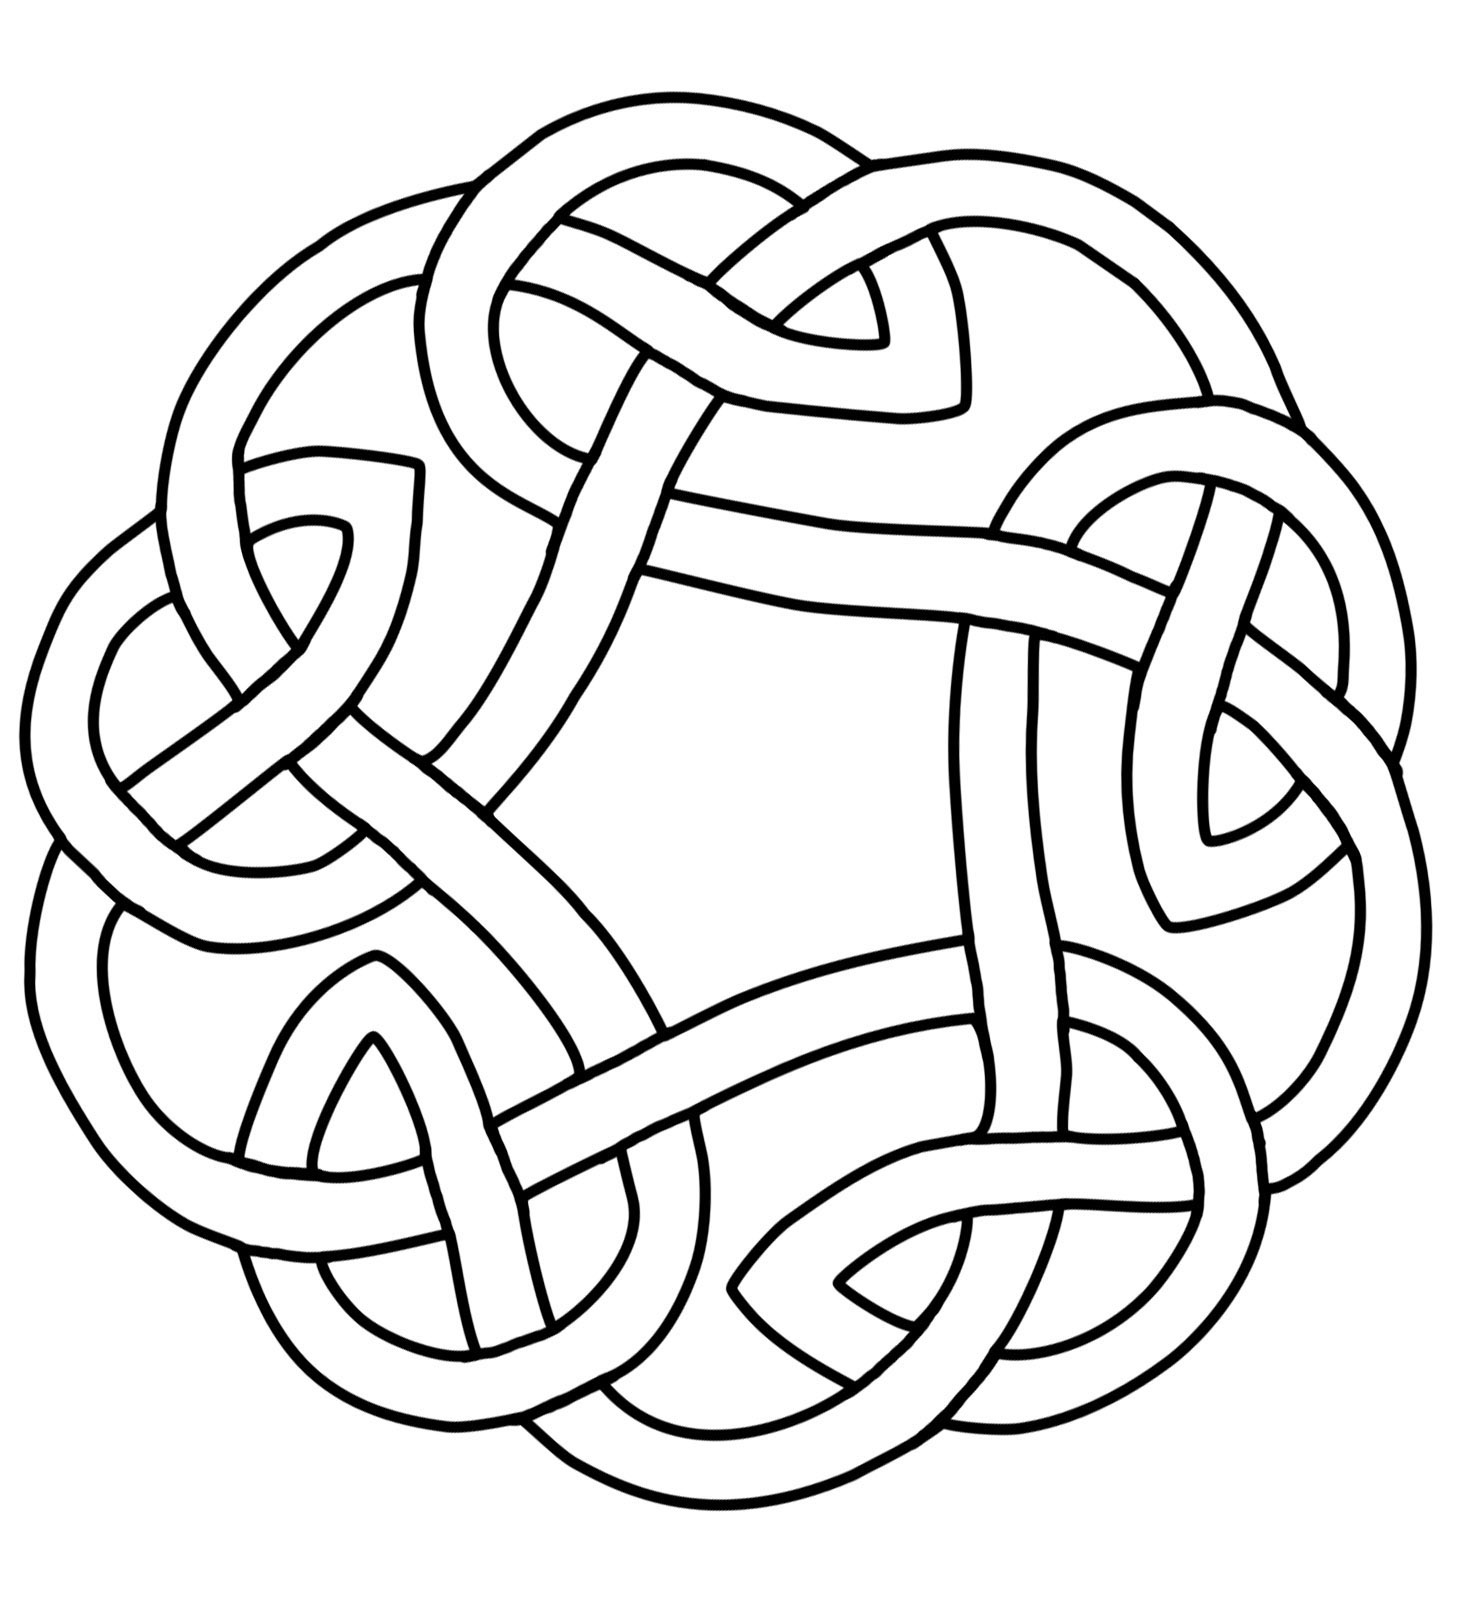 Celtic Knot Circle - ClipArt Best